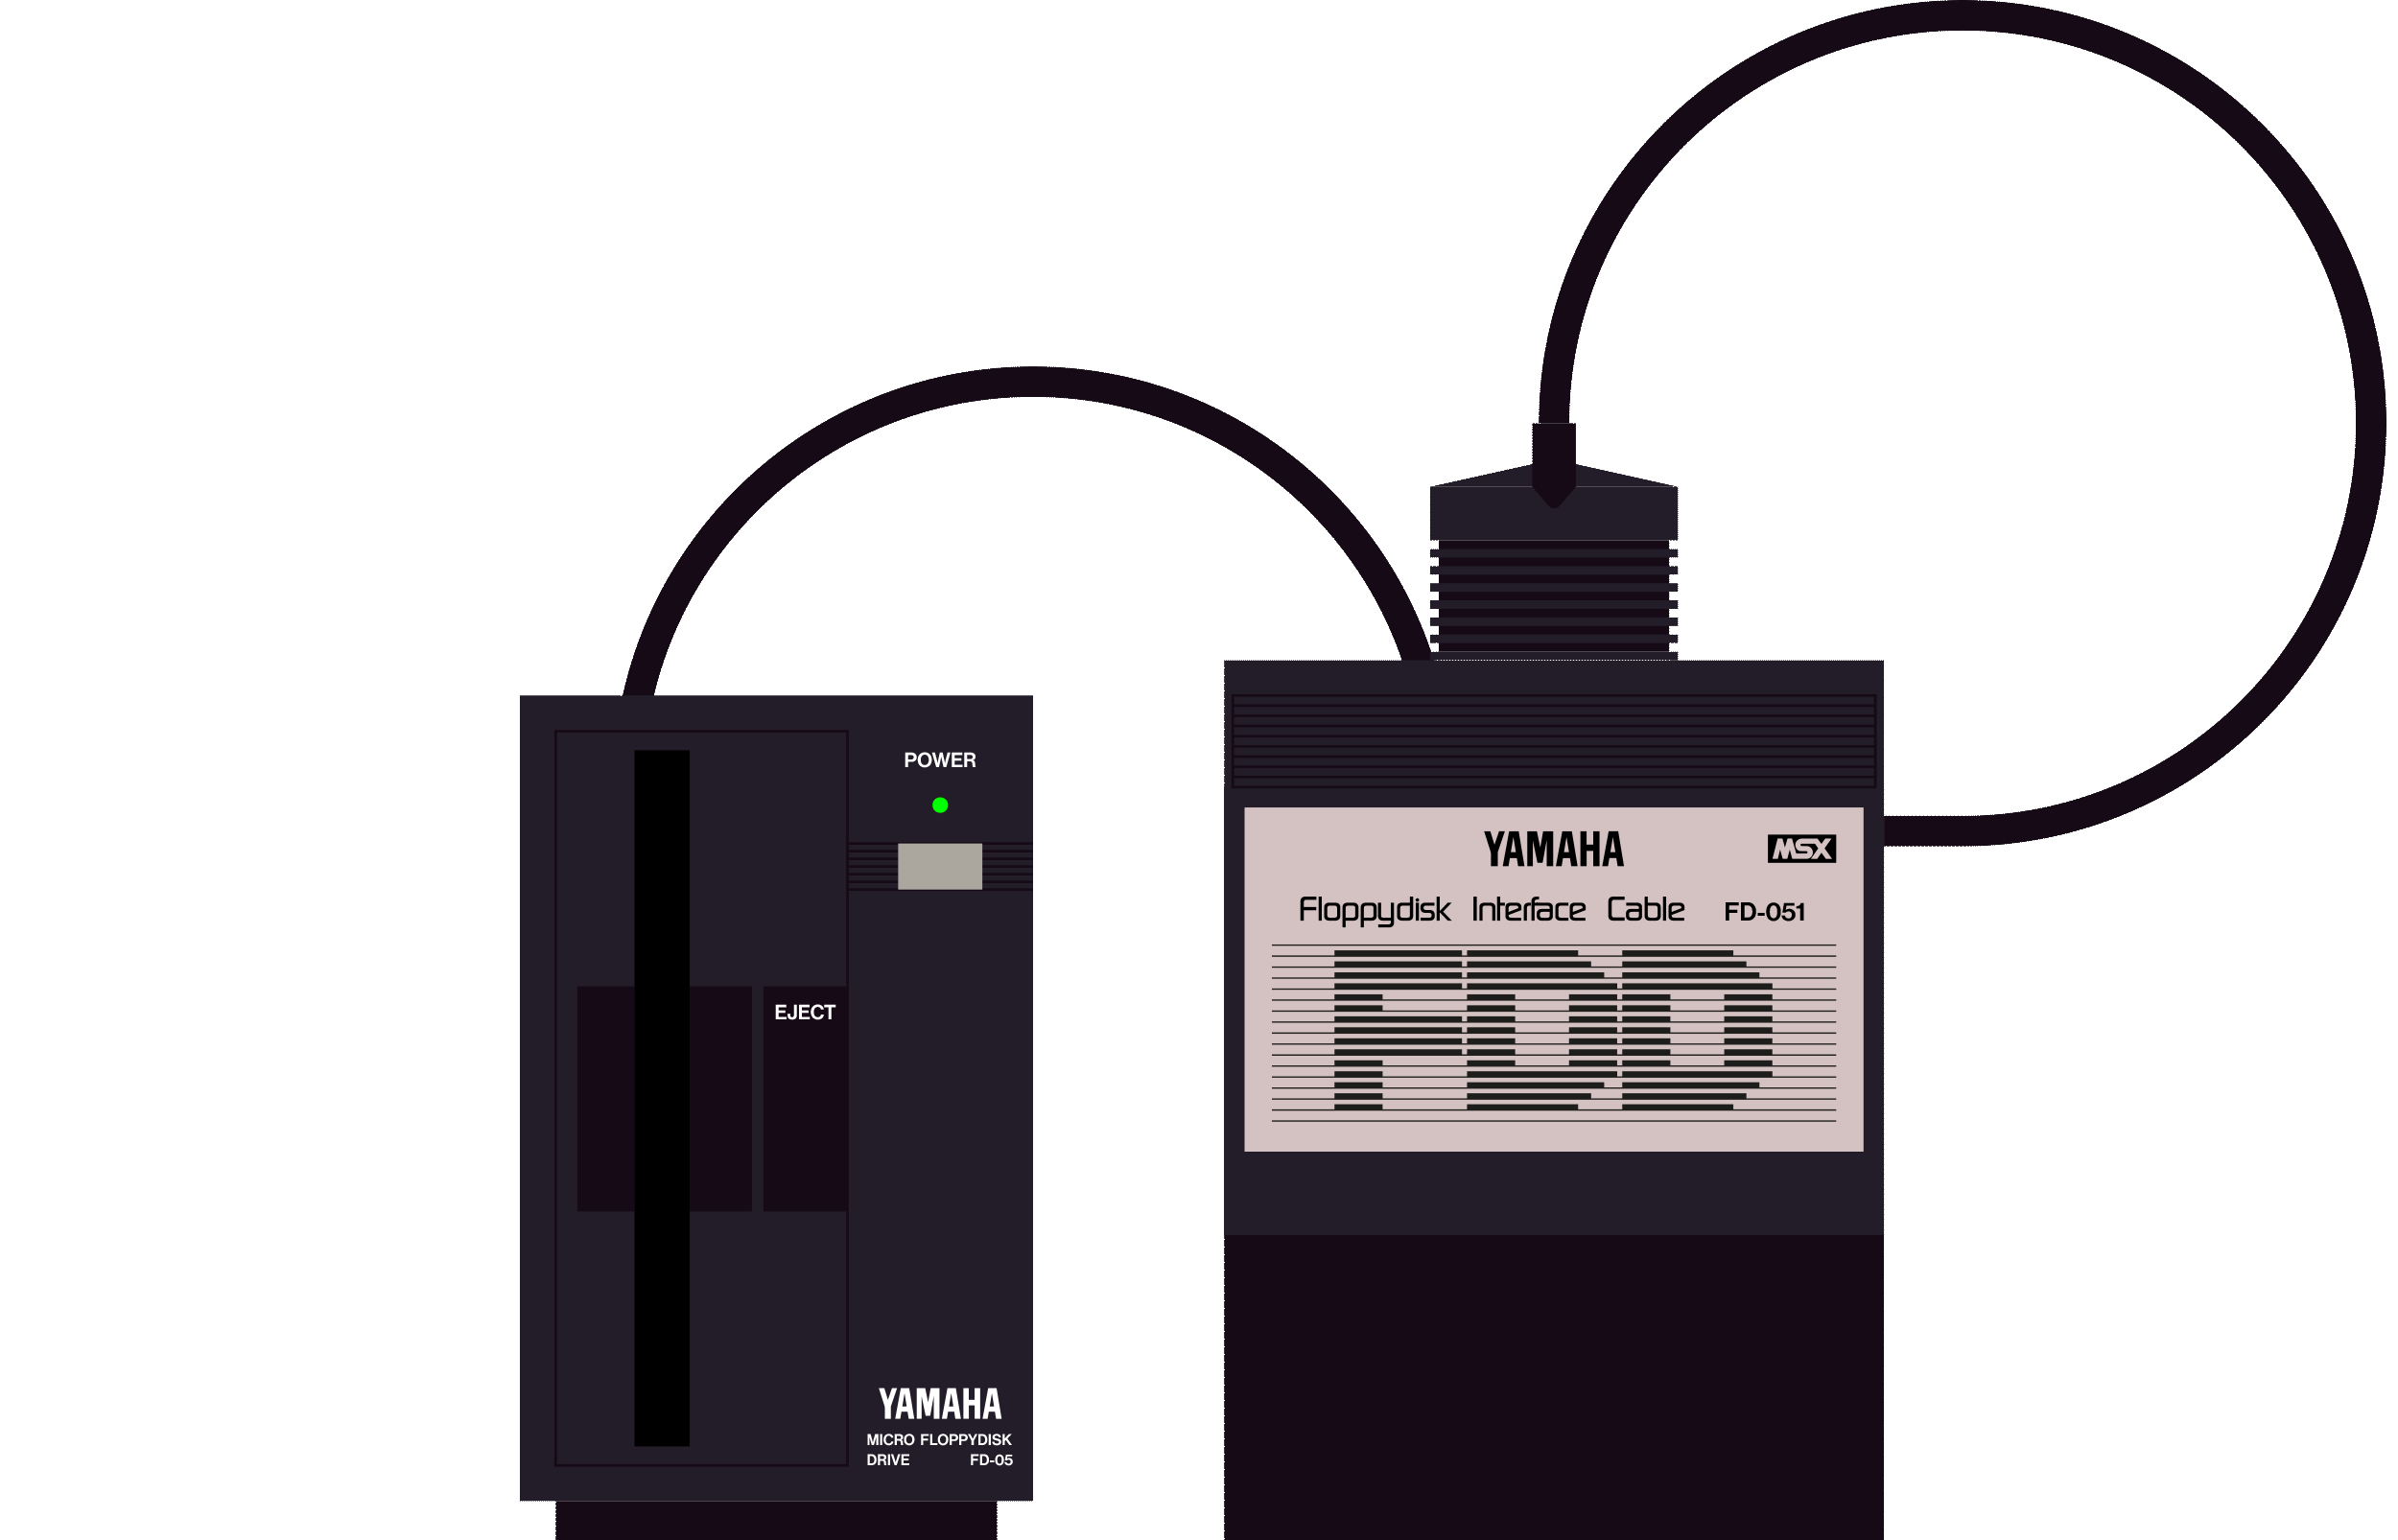 Yamaha MSX fd 05 floppy disk drive